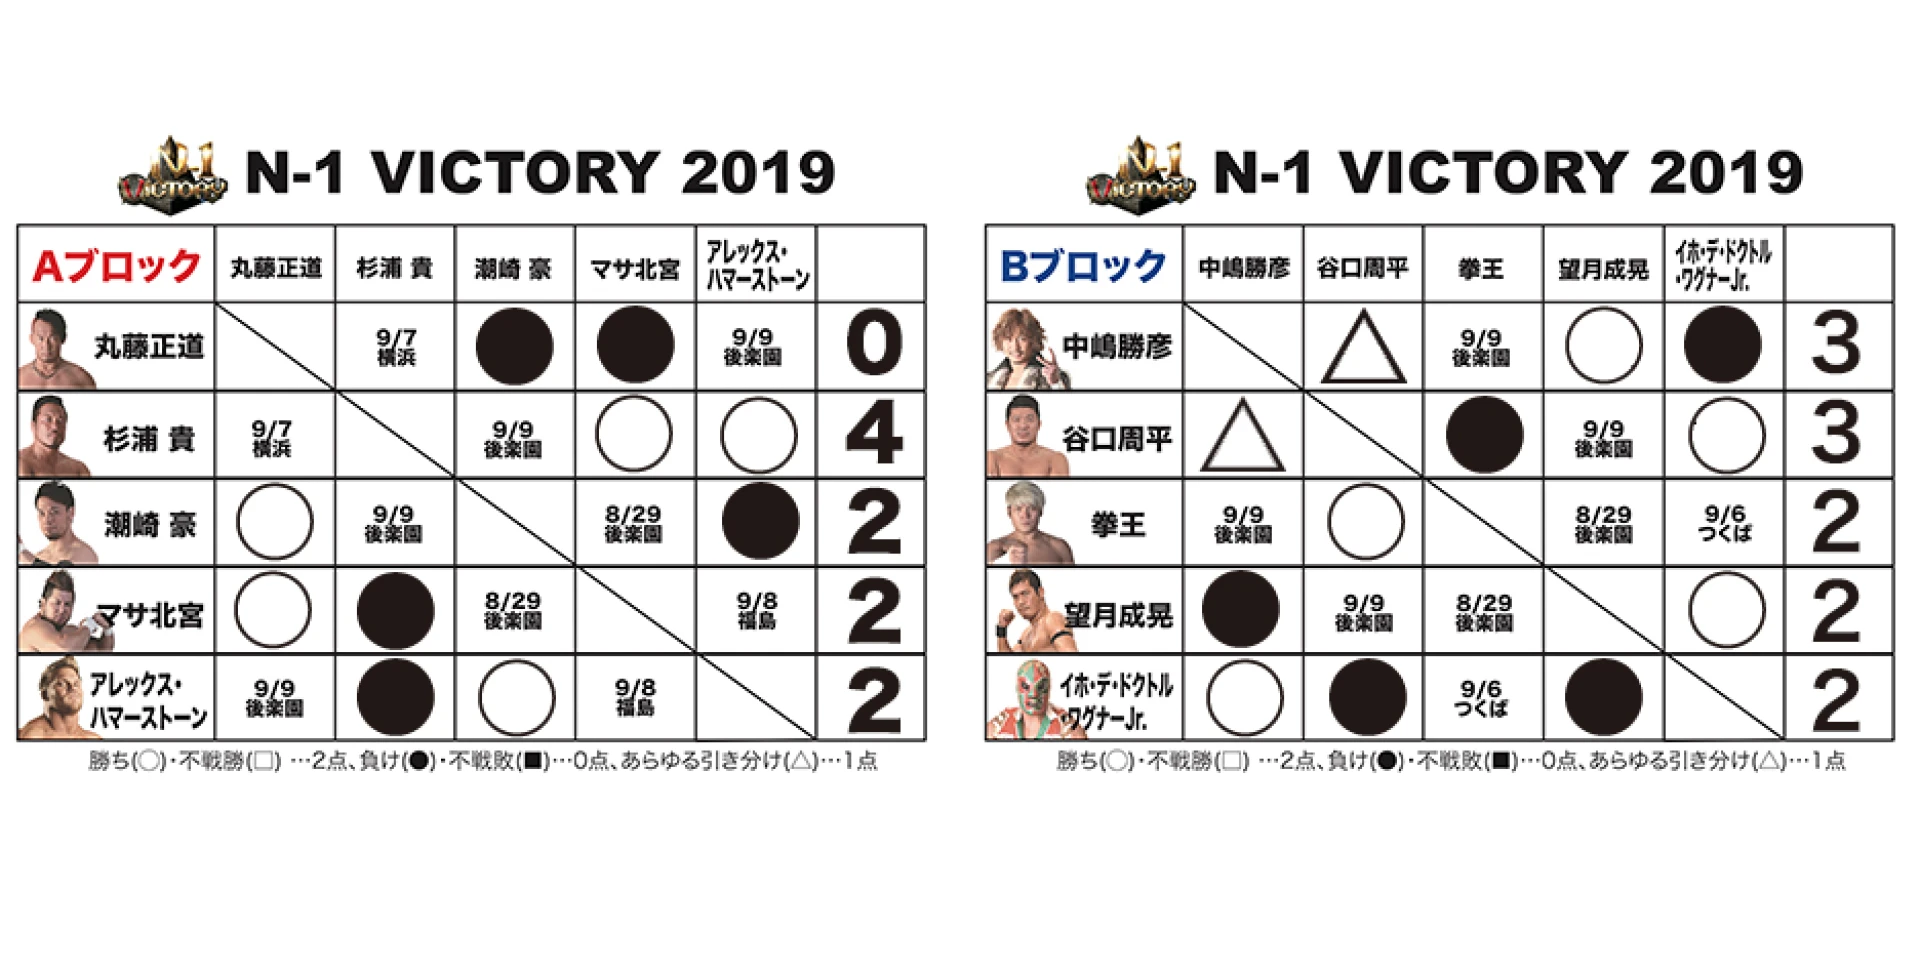 【8.25大阪大会終了時の得点状況】『N-1 VICTORY 2019』得点表